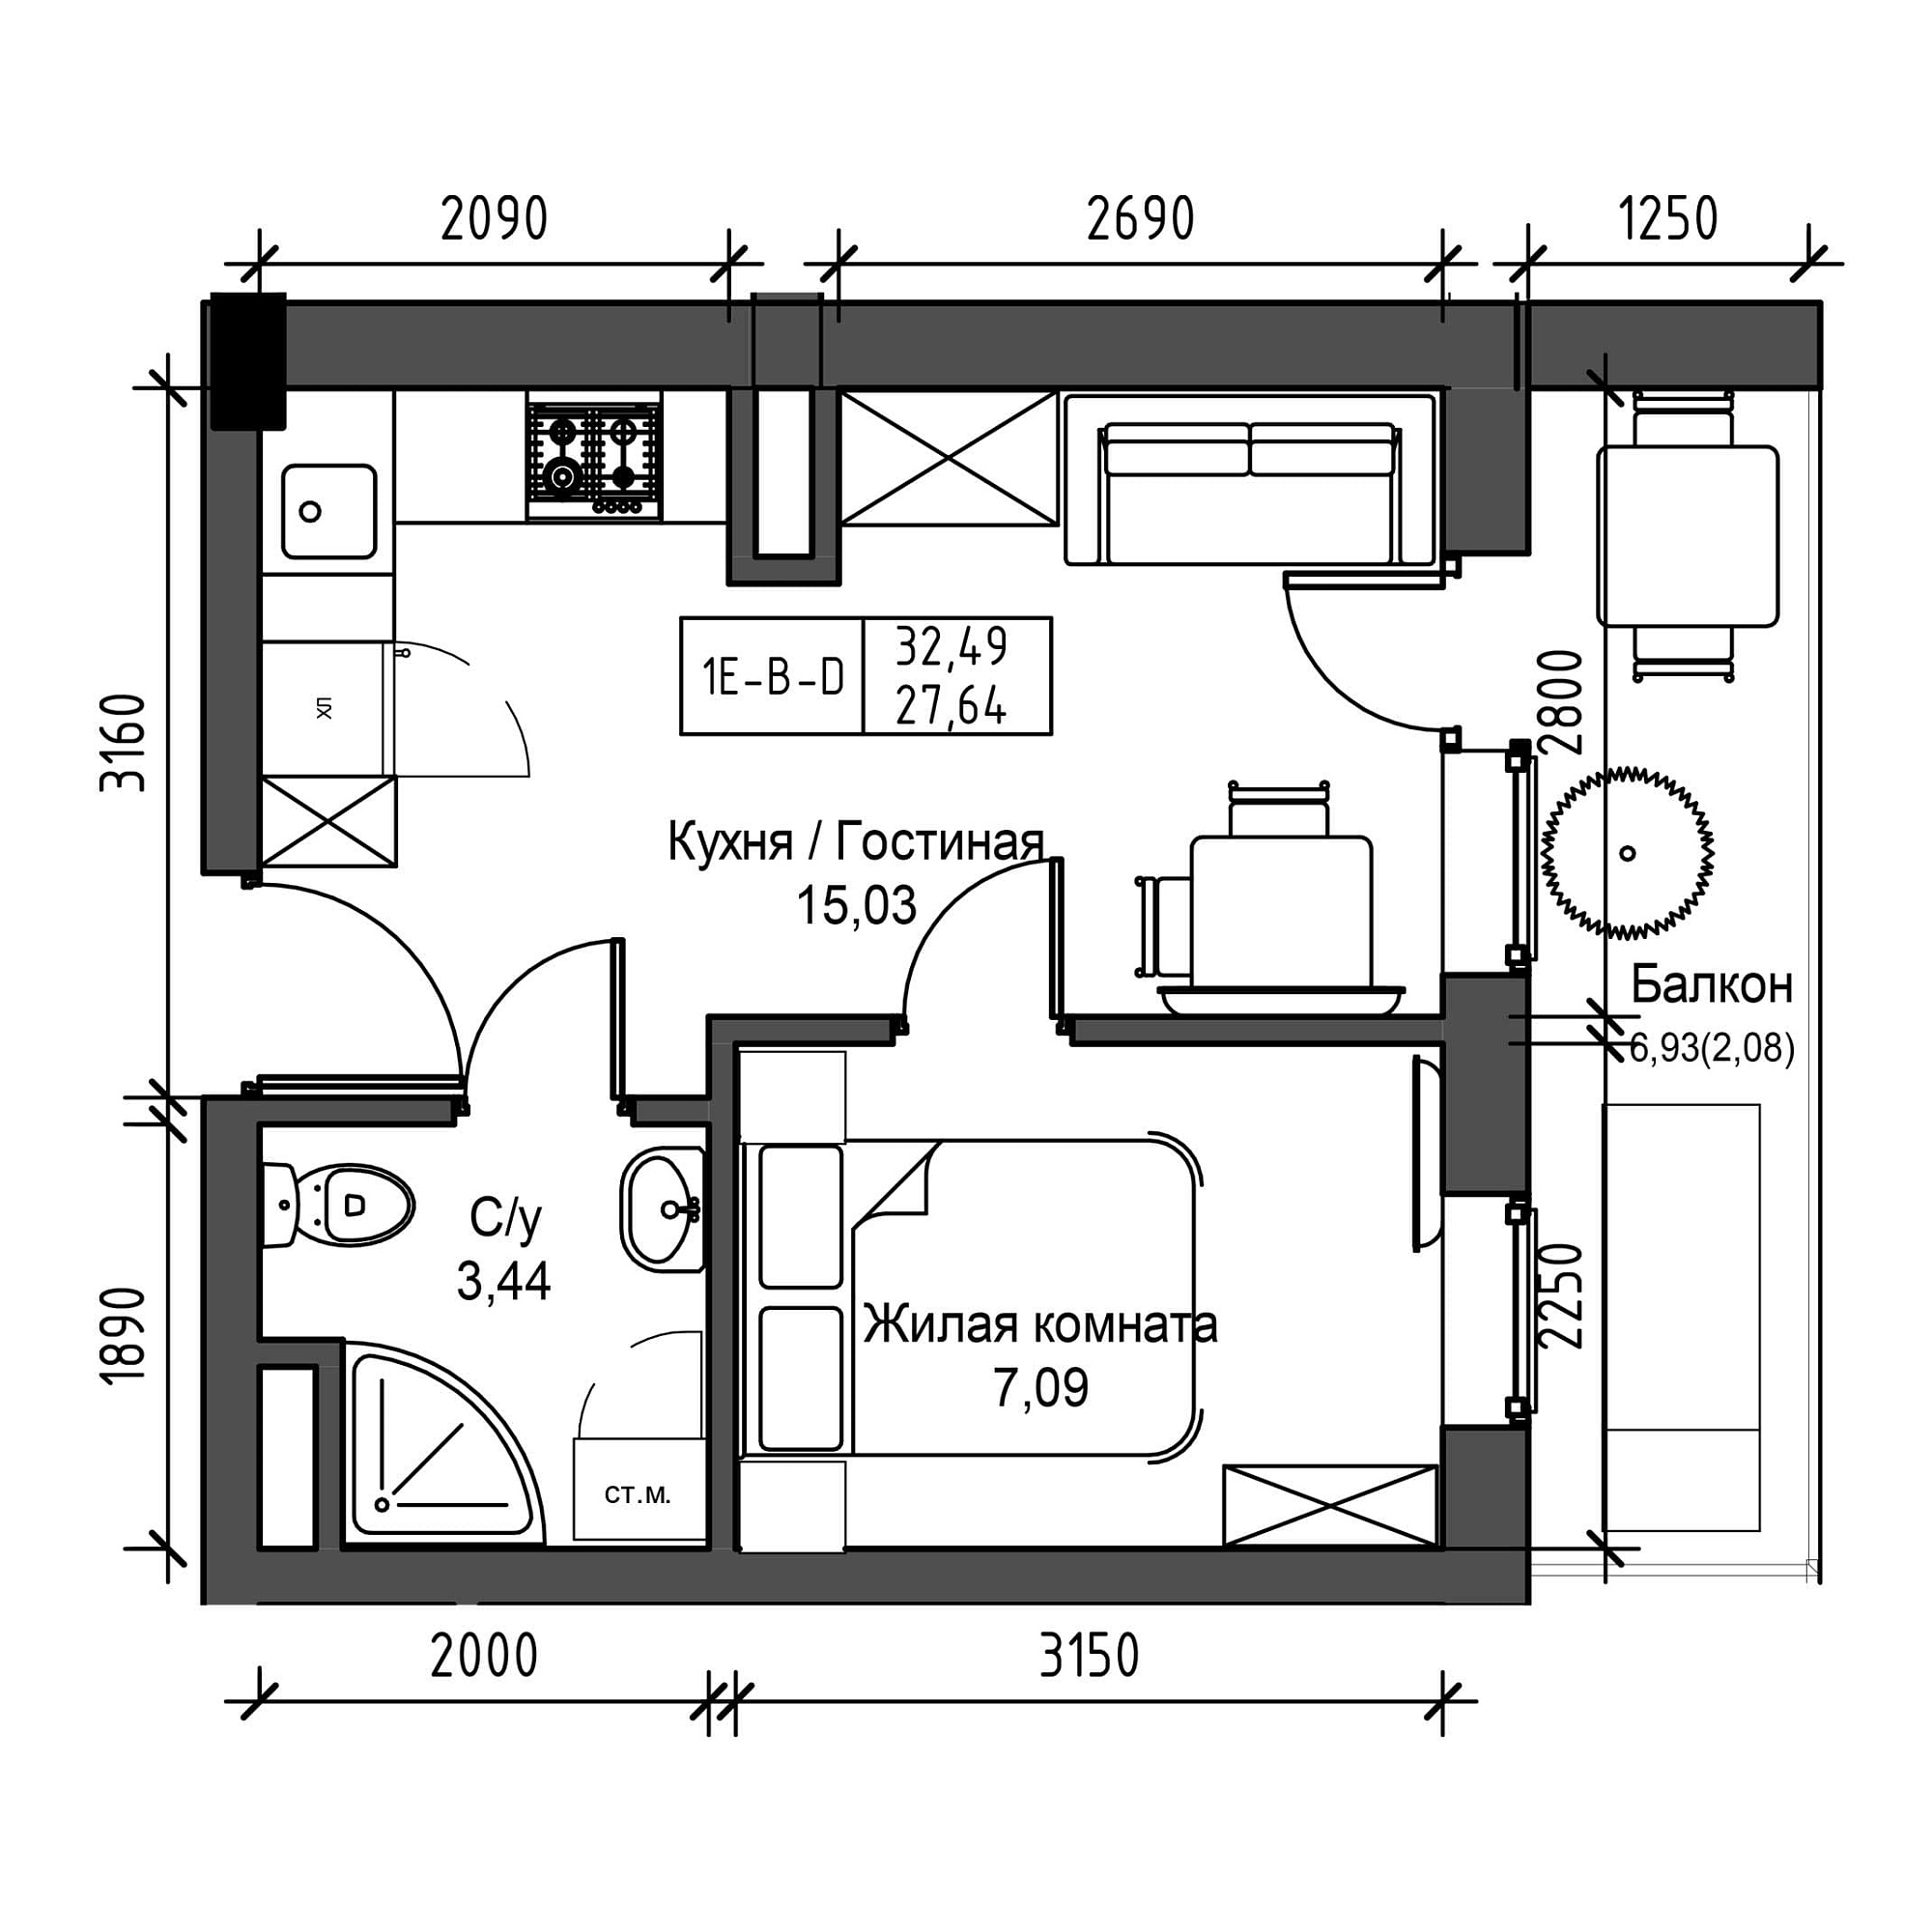 Планування 1-к квартира площею 27.64м2, UM-001-07/0001.